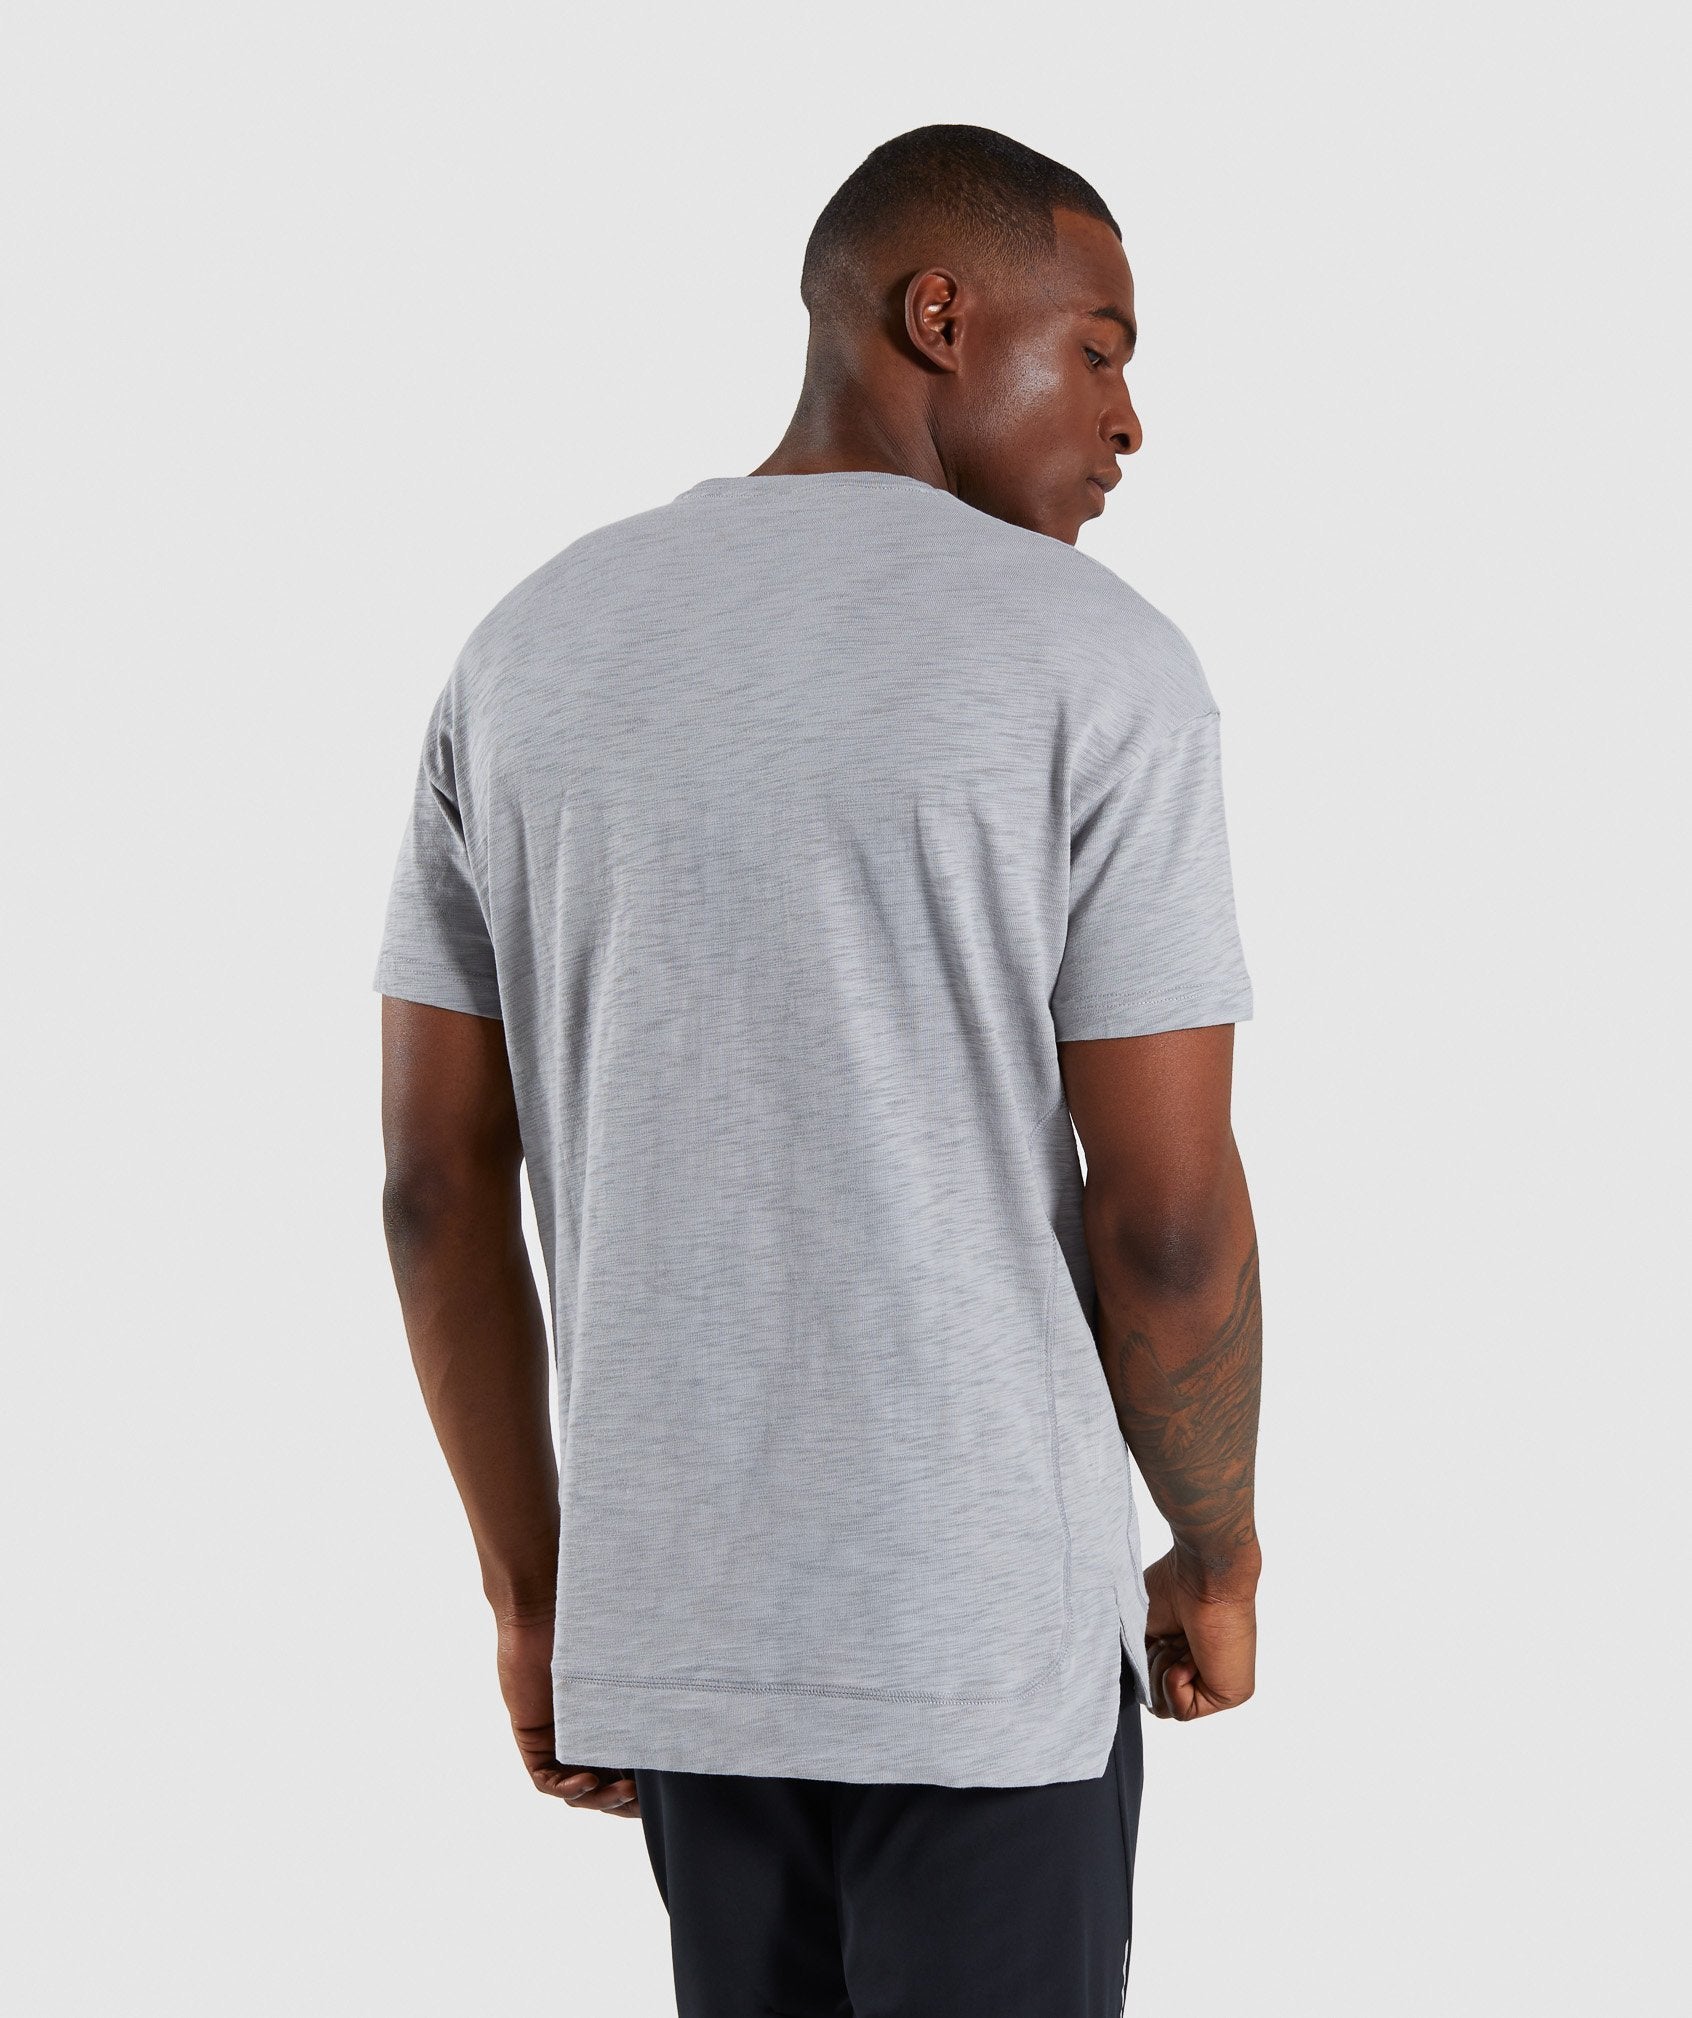 Tonal T-Shirt product image 2